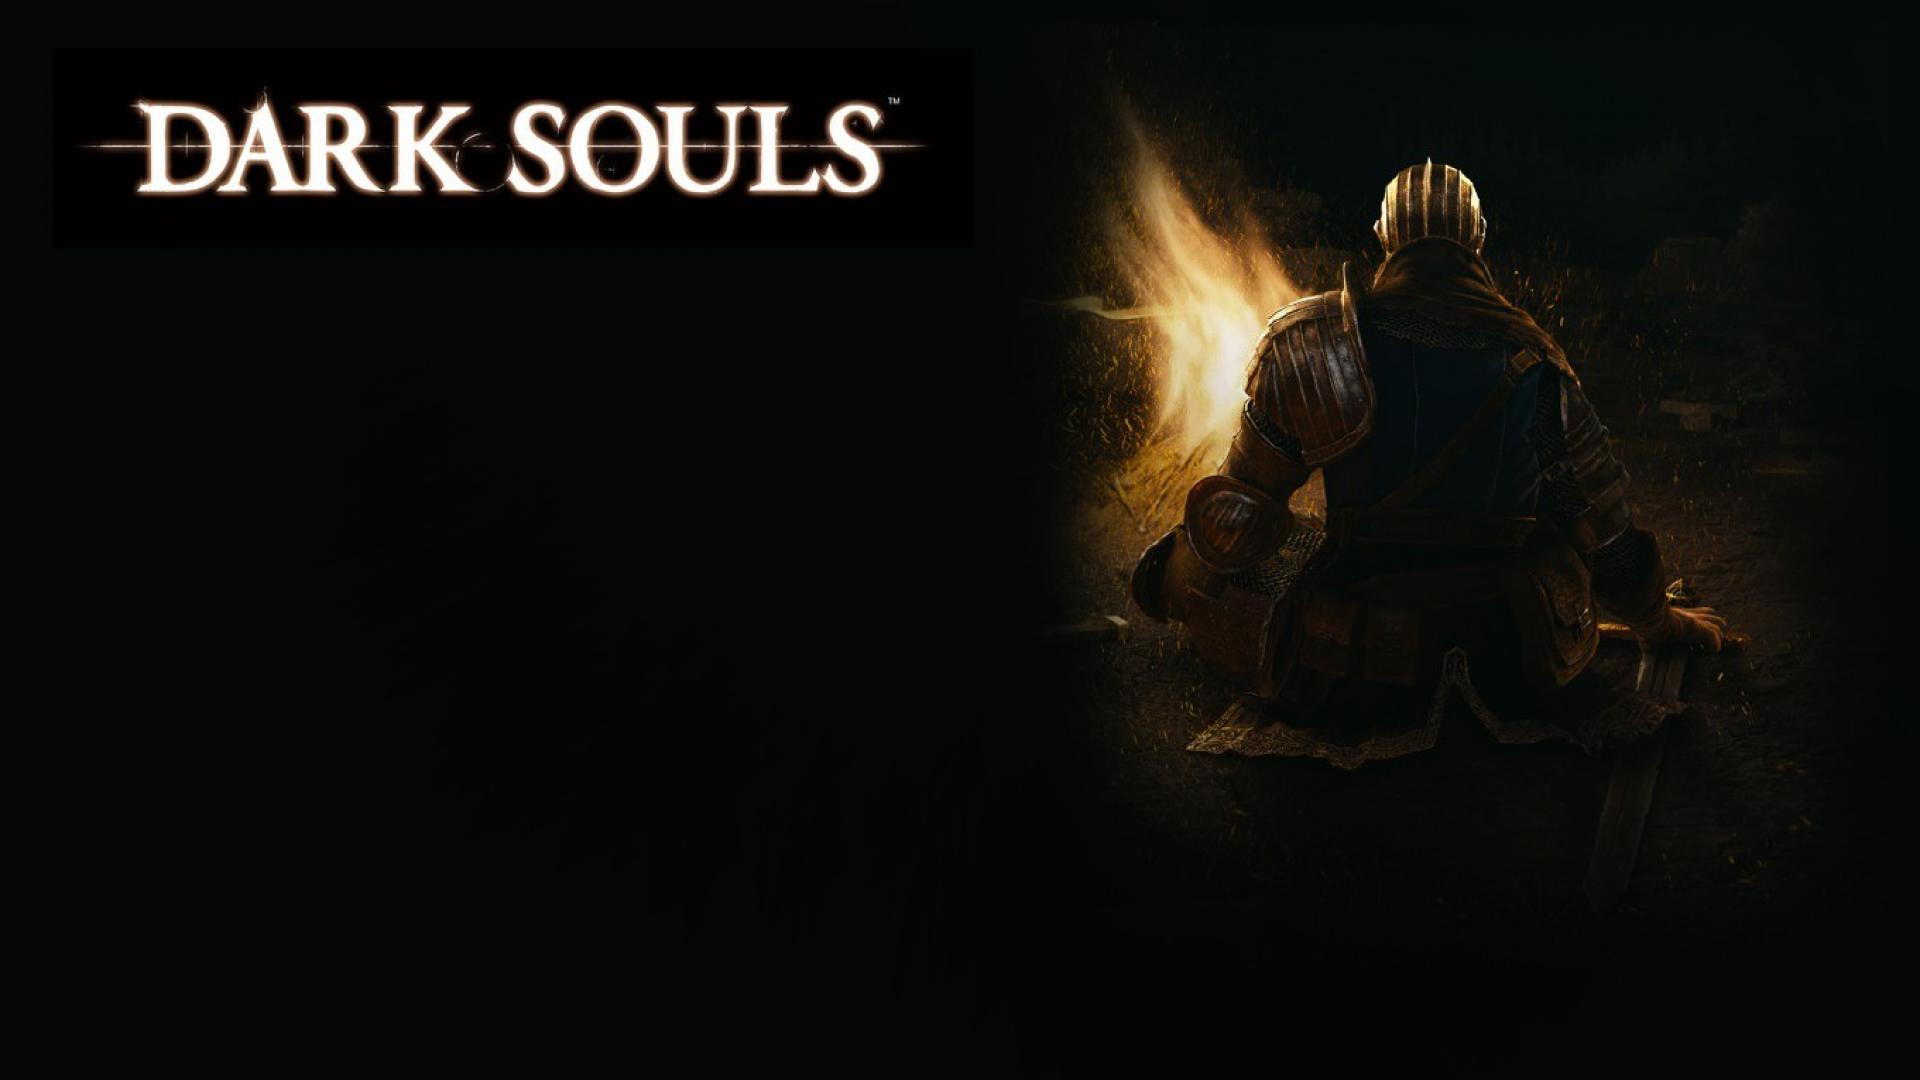 Dark souls 1.15. Dark Souls Remastered обложка. Dark Souls 3 загрузочный экран. Dark Souls 3 обложка. Dark Souls 1 обложка.